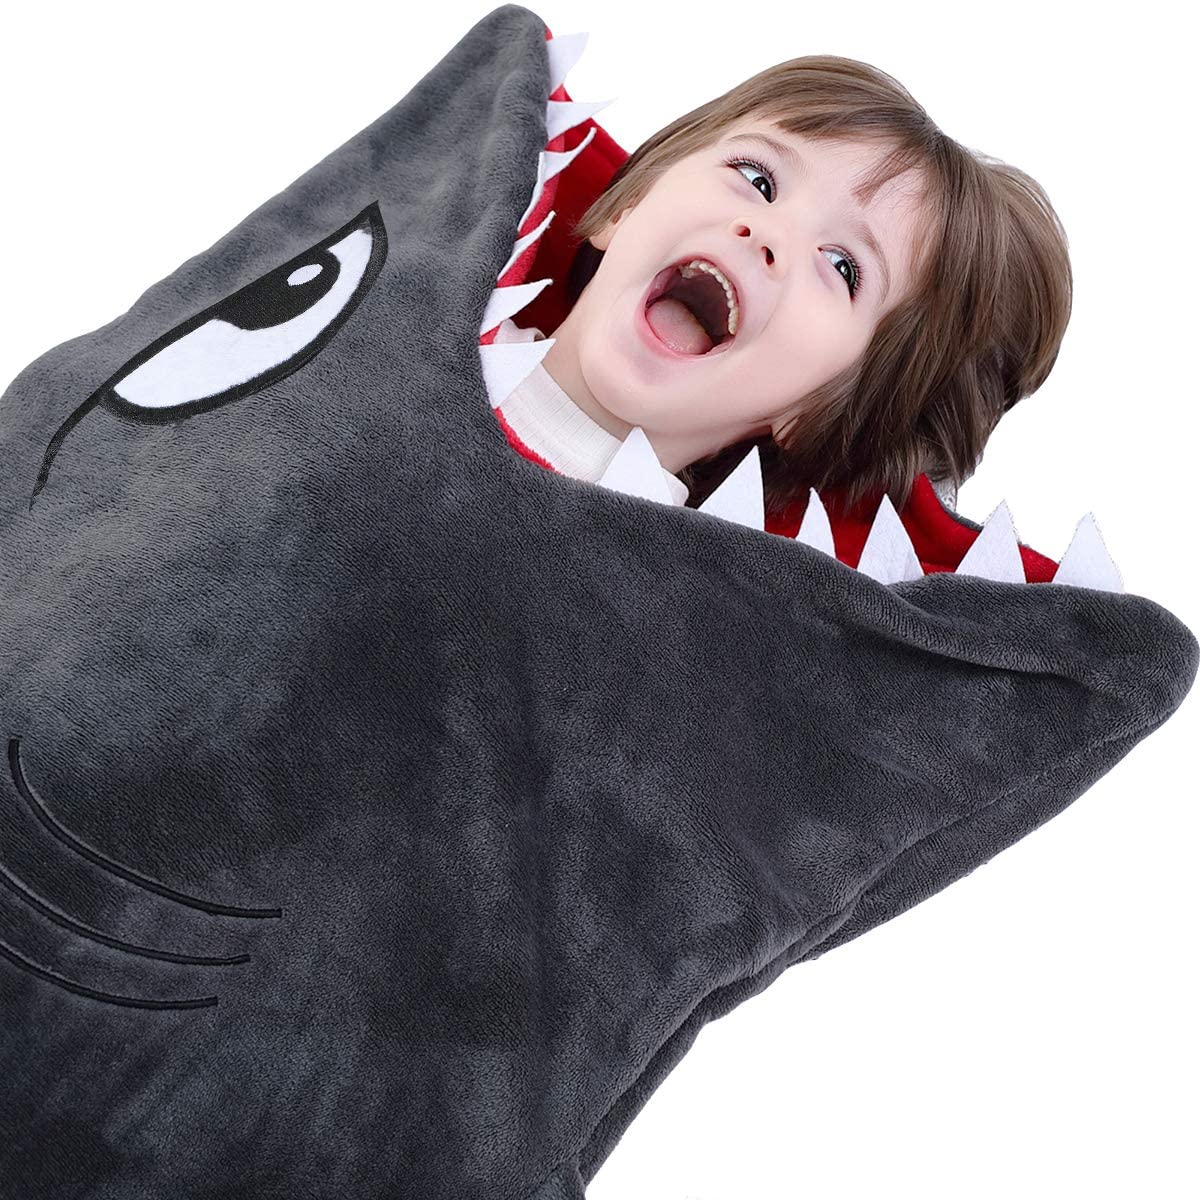 The Ultimate Warm Shark Blanket